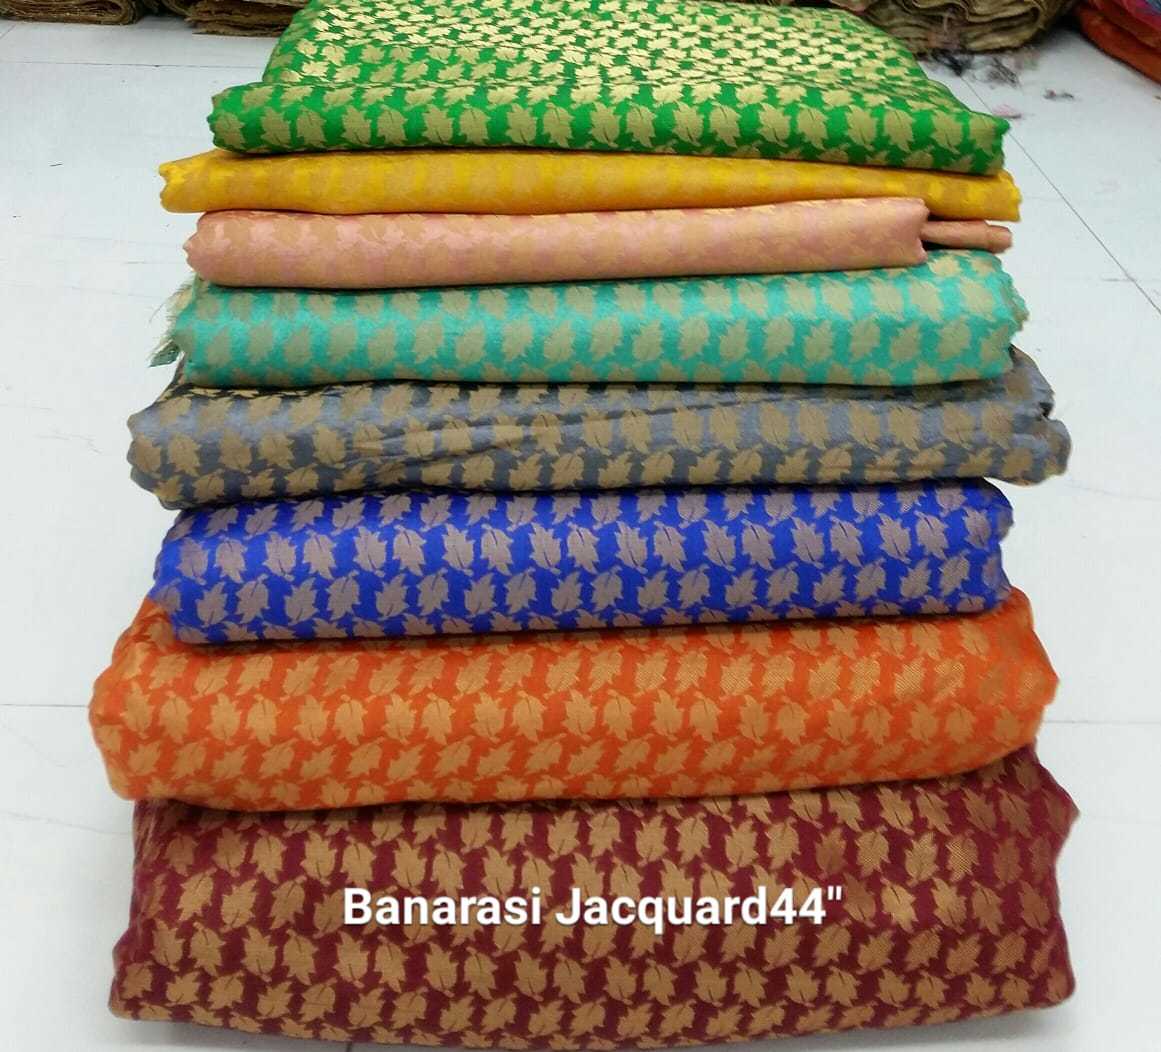 Banarasi Jacquard Fabric